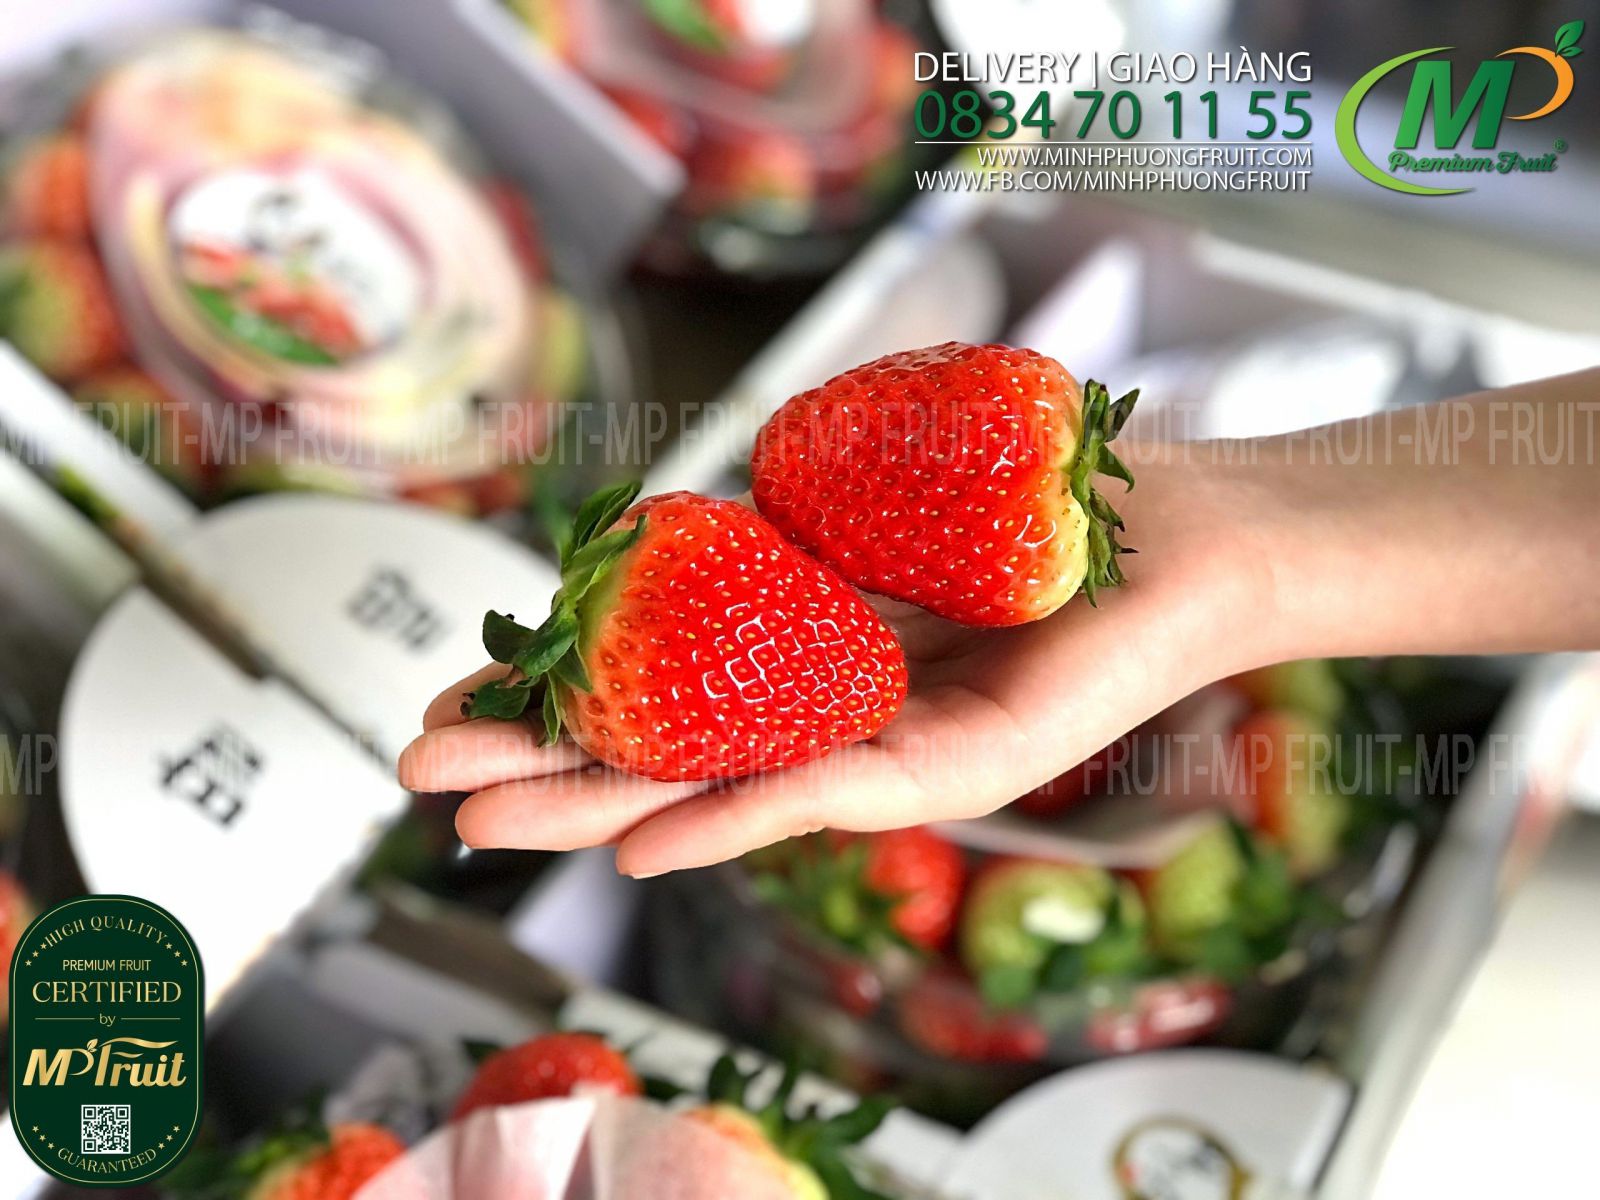 Dâu Tây Premium Hàn Quốc | K Farm - Hộp 500g tại MP Fruit